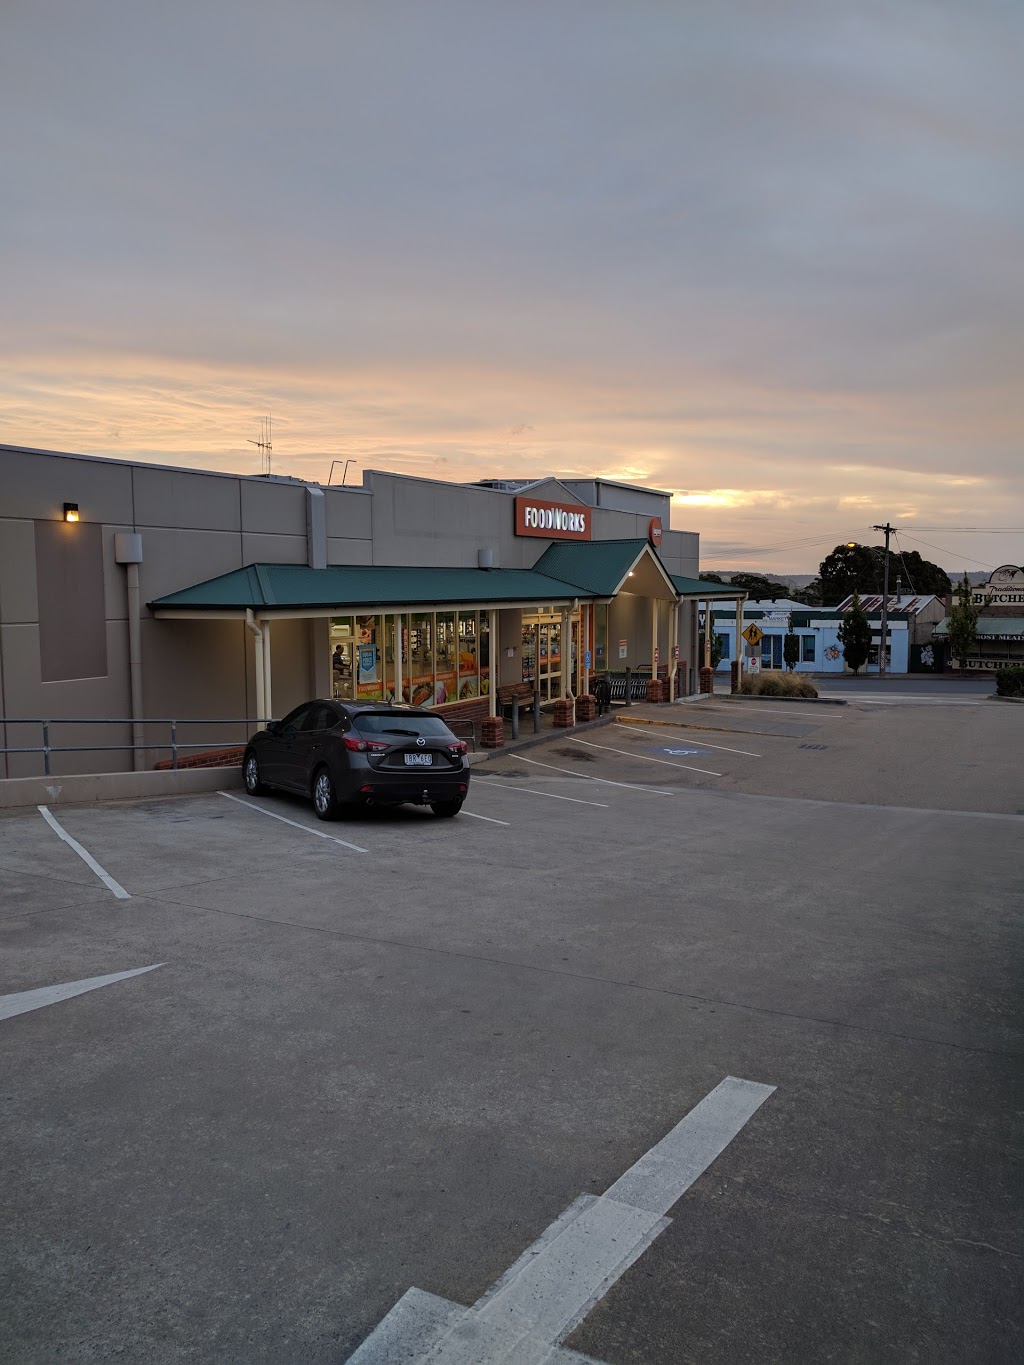 Foodworks | supermarket | 70/78 Nicholson St, Orbost VIC 3888, Australia | 0351541206 OR +61 3 5154 1206